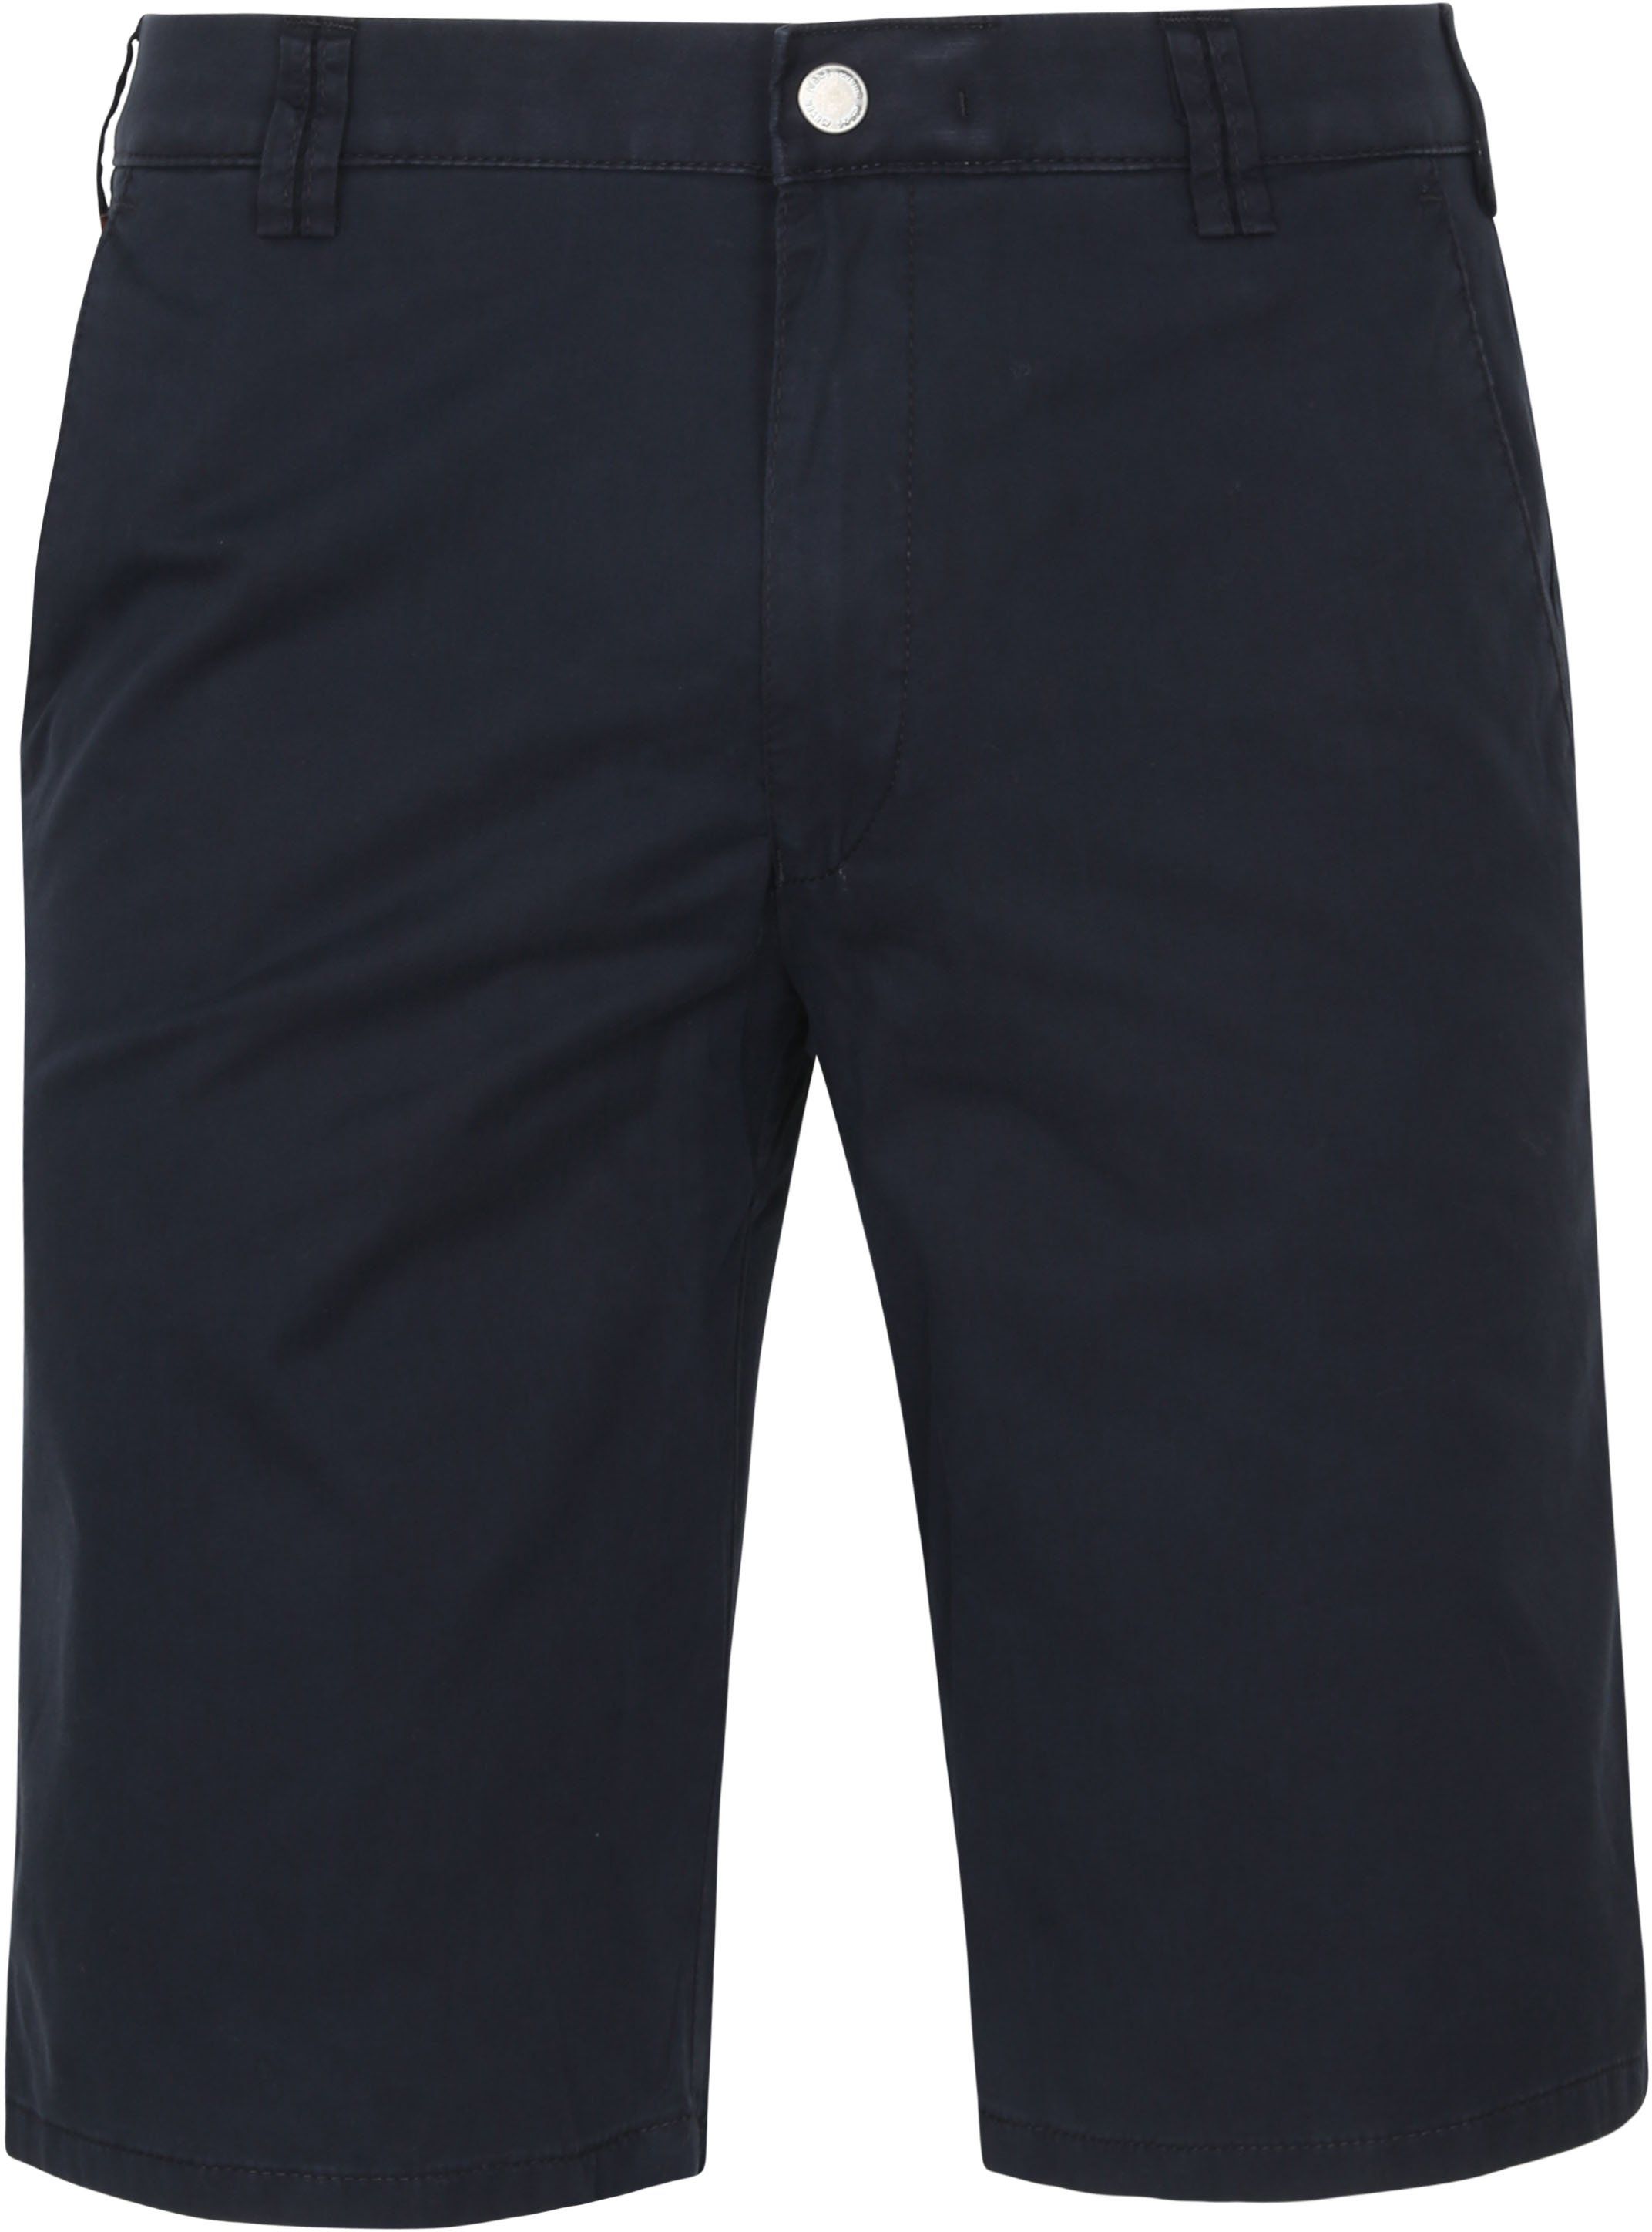 Meyer Palma 3130 Shorts Navy Blue Dark Blue size 40-S